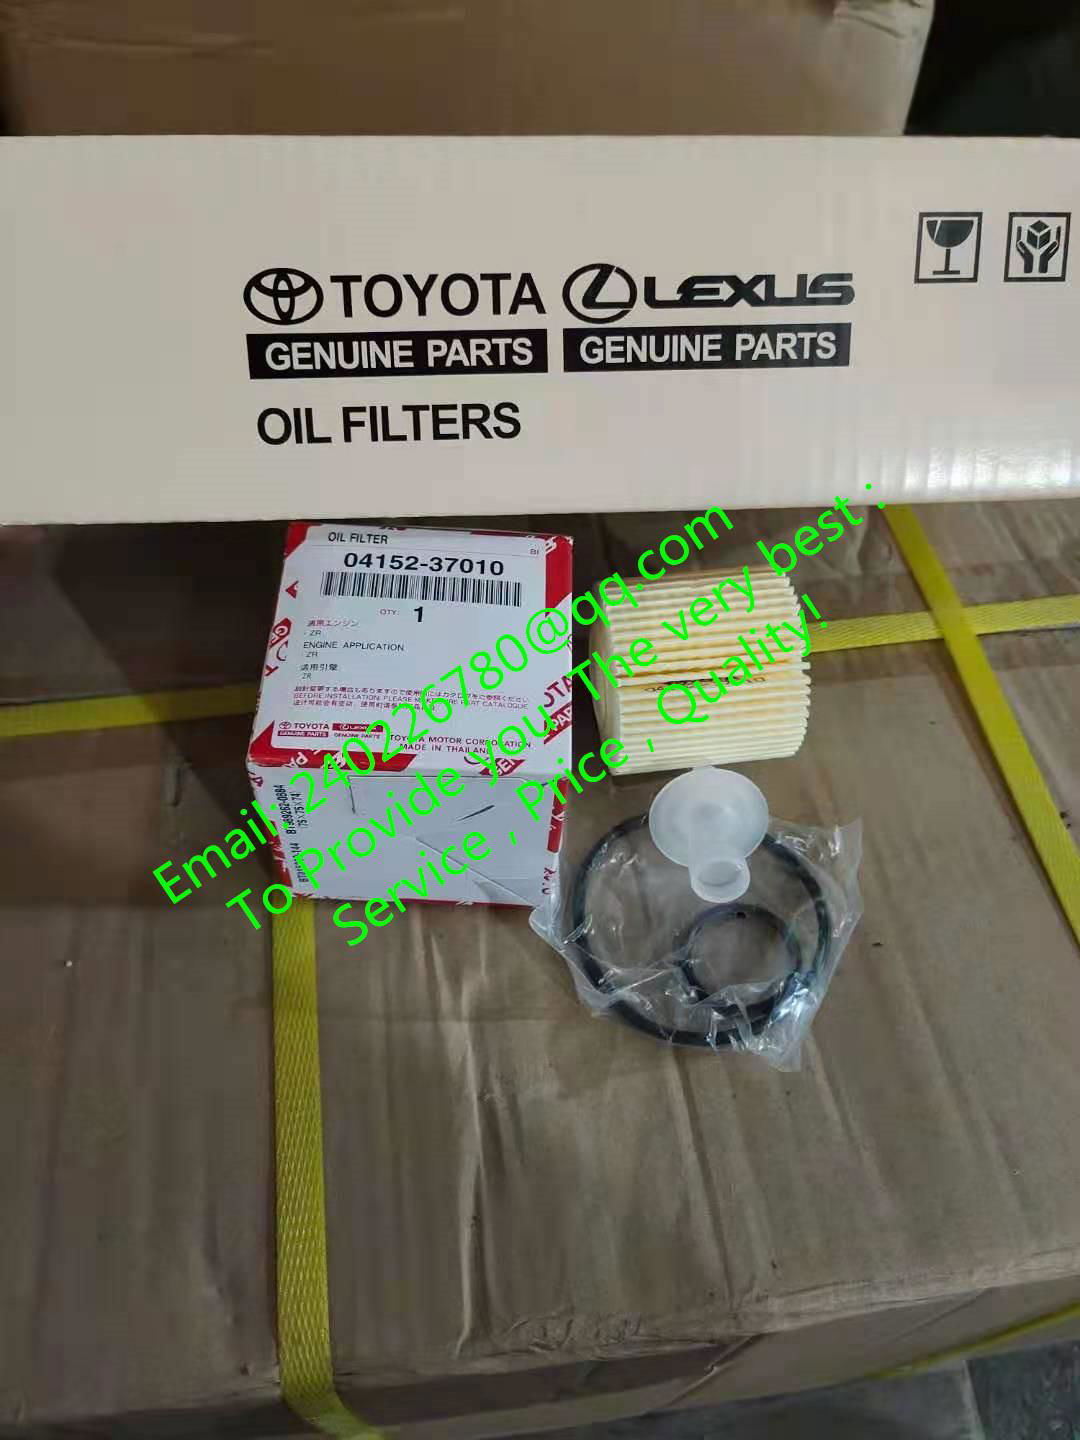 FOR TOYOTA Corolla Oil Filter 04152-37010 04152-YZZA6 04152-B1010  0415237010 